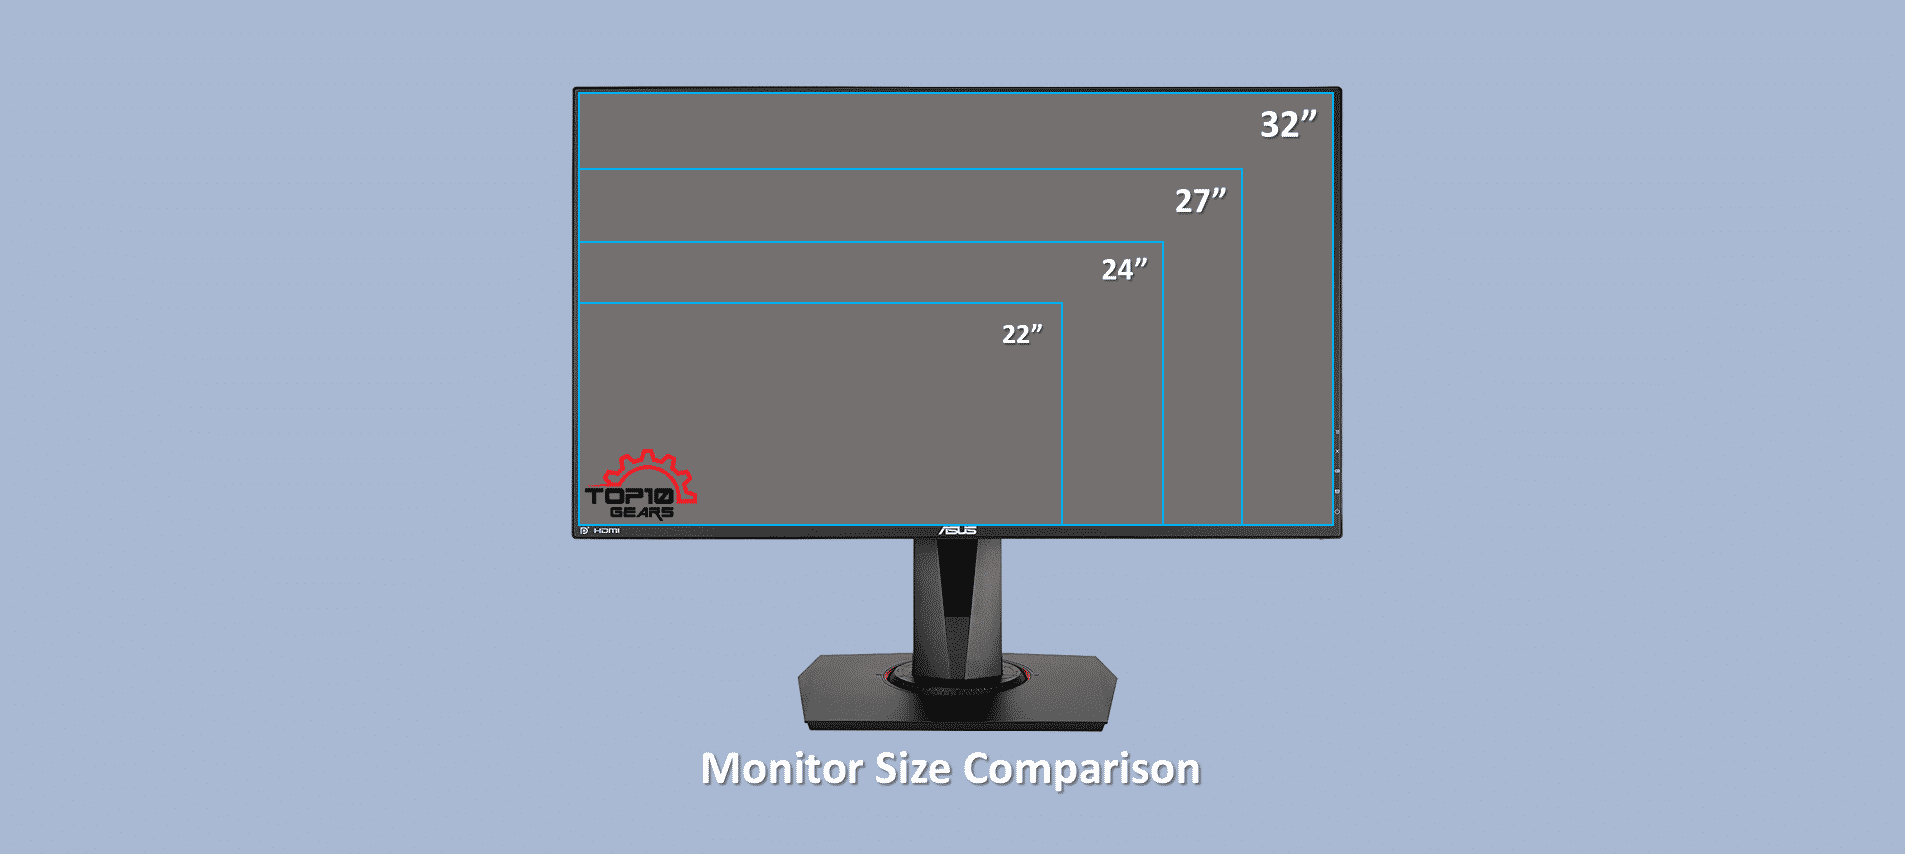 Monitor size